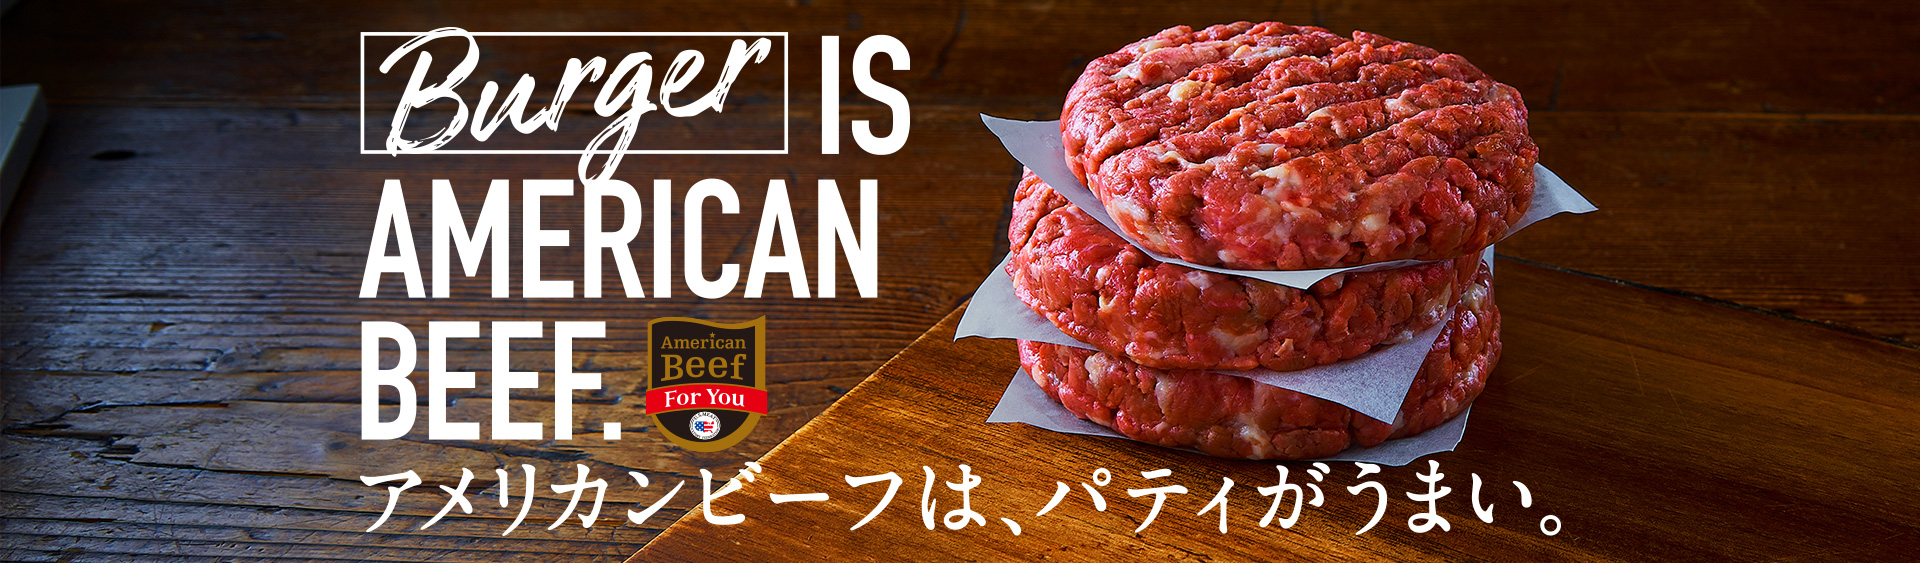 Burger IS AMERICAN BEEF.アメリカンビーフは、パティがうまい。